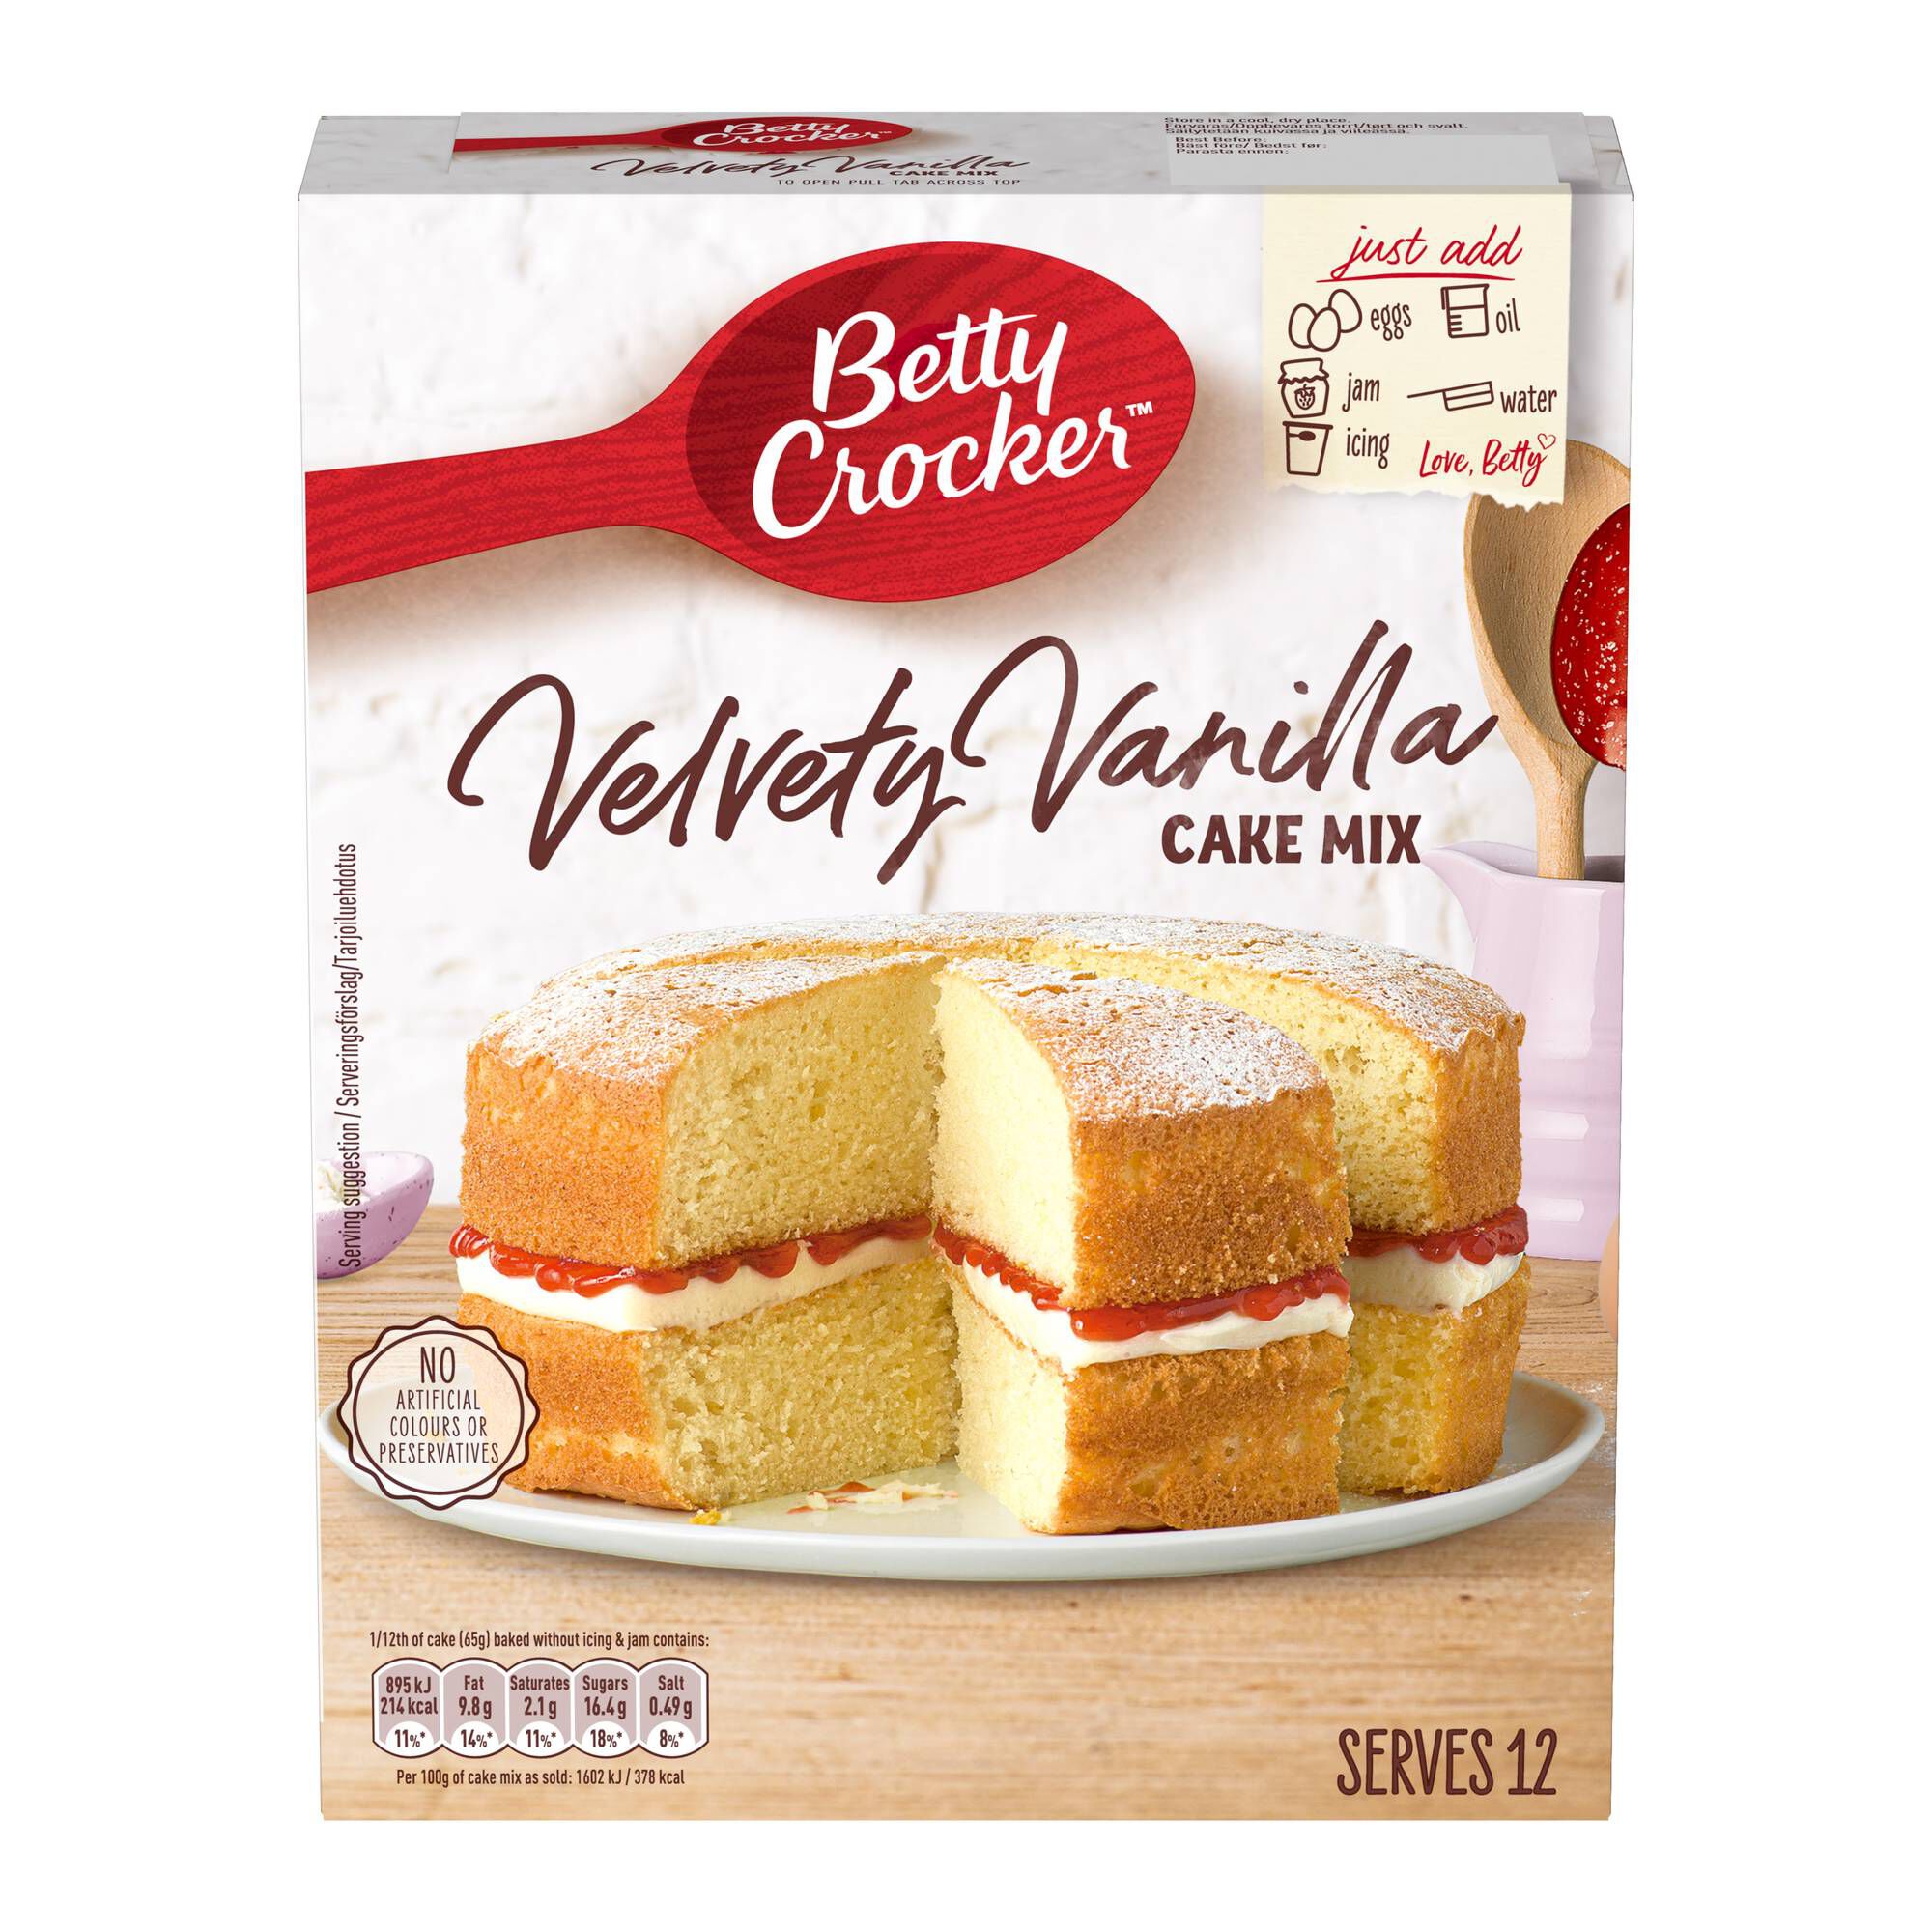 Betty Cake B&B | Gozo 2020 UPDATED DEALS, HD Photos & Reviews